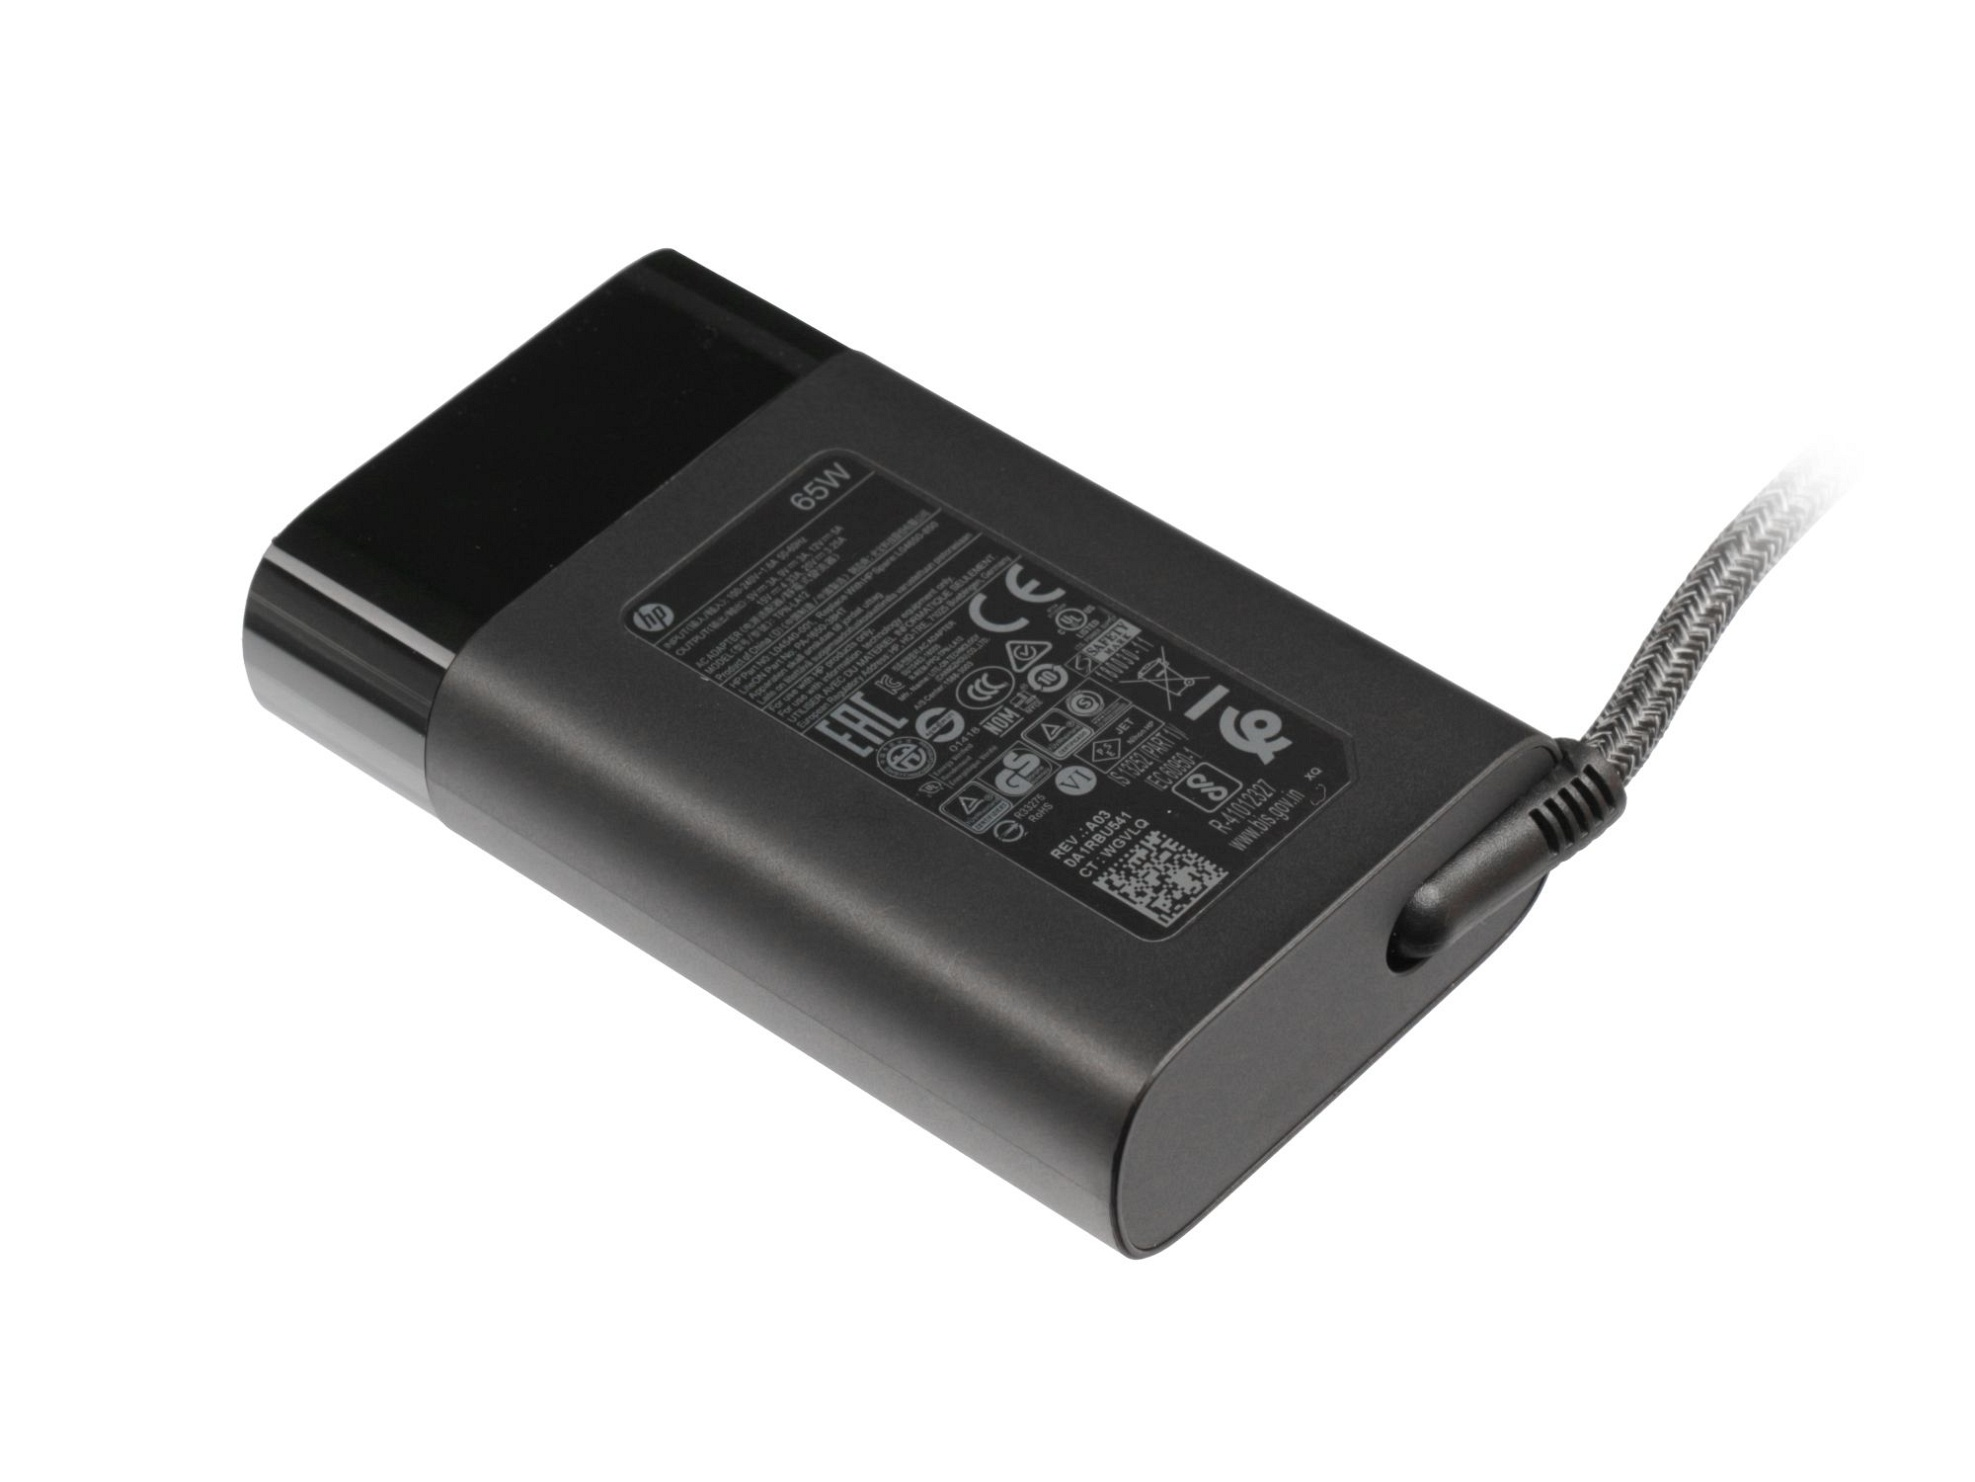 HP L04650-850 abgerundetes Original USB-C Netzteil Watt 65